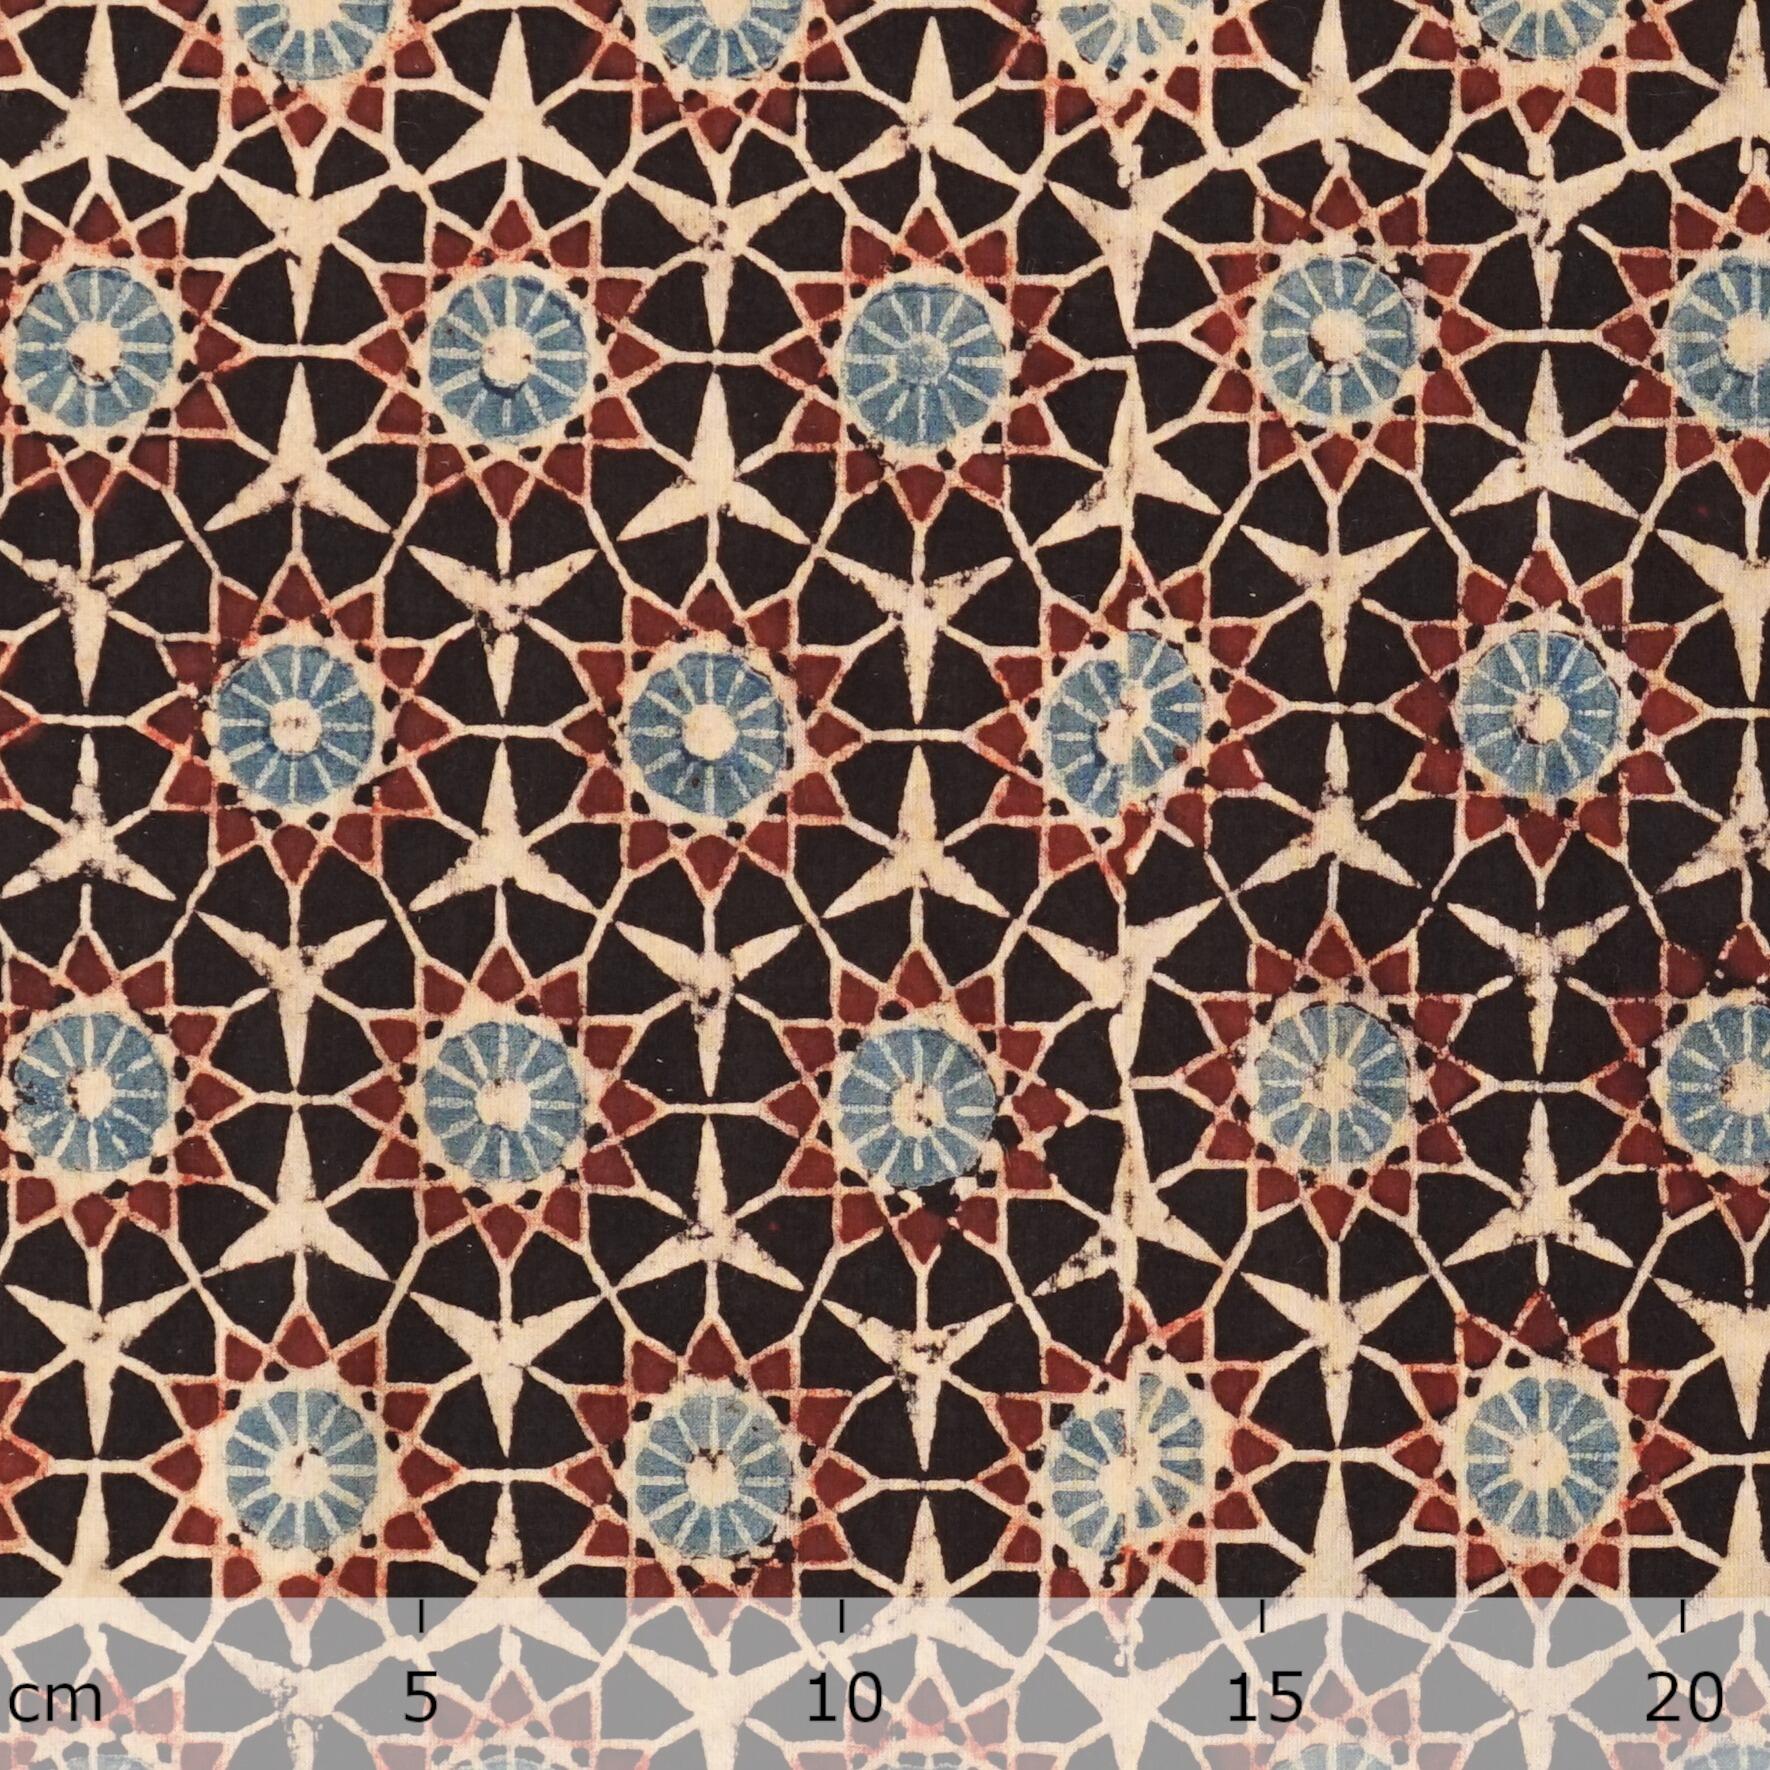 Block Printed Fabric, 100% Cotton, Ajrak Design: Black Base, Madder Root Red, Blue, Cream Burst. Ruler